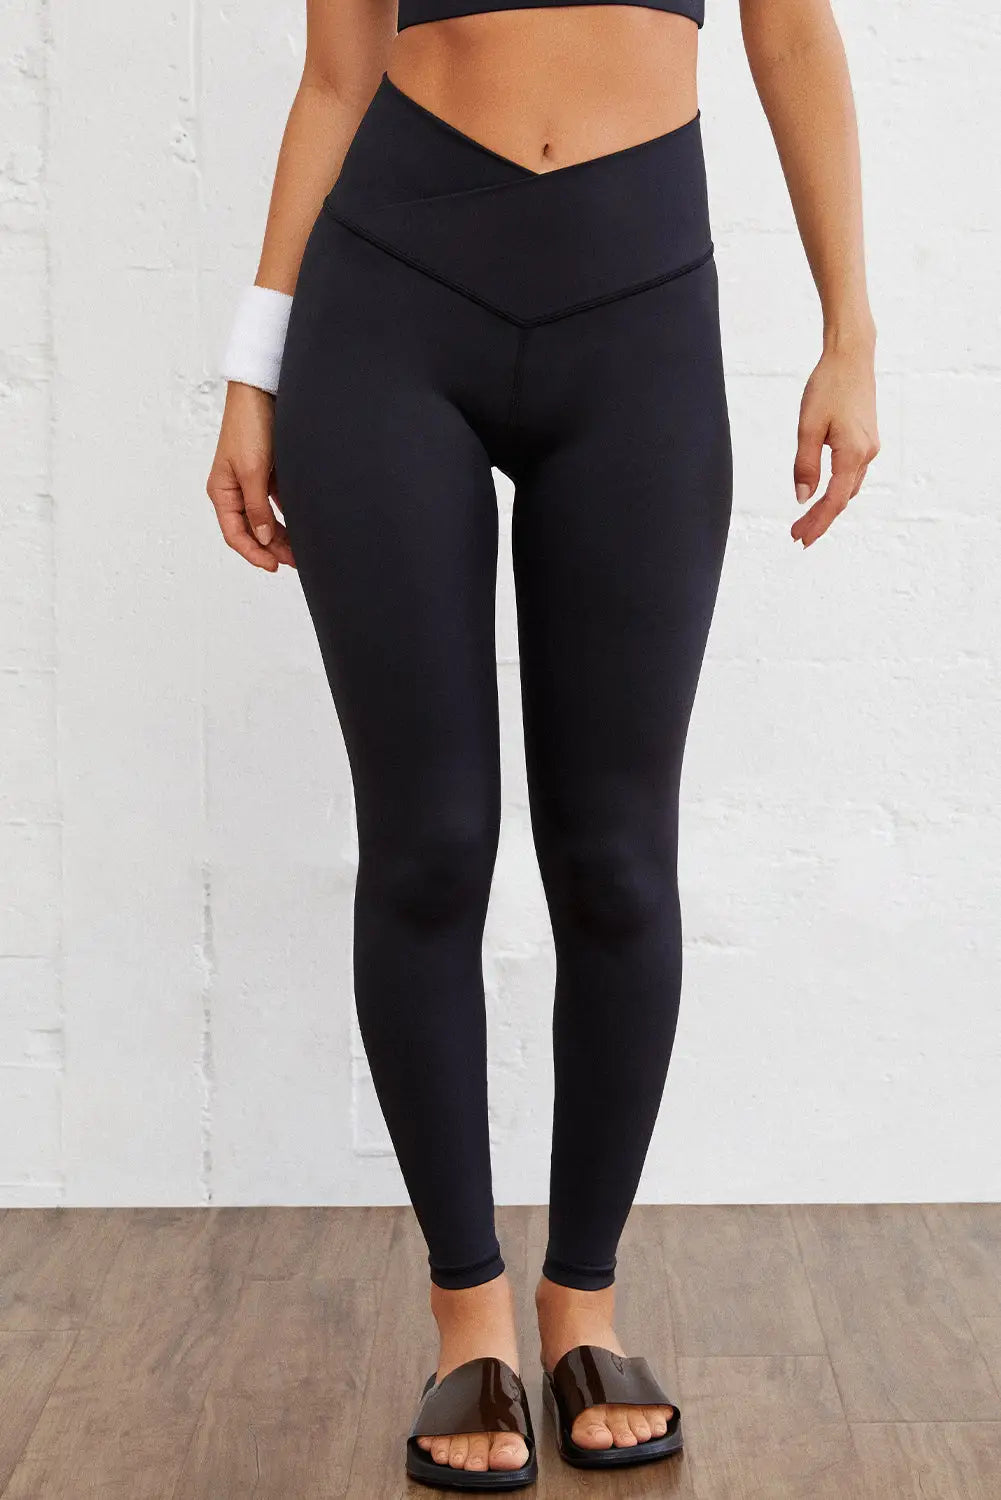 Black arched waist seamless active leggings - s 75% polyamide + 25% elastane